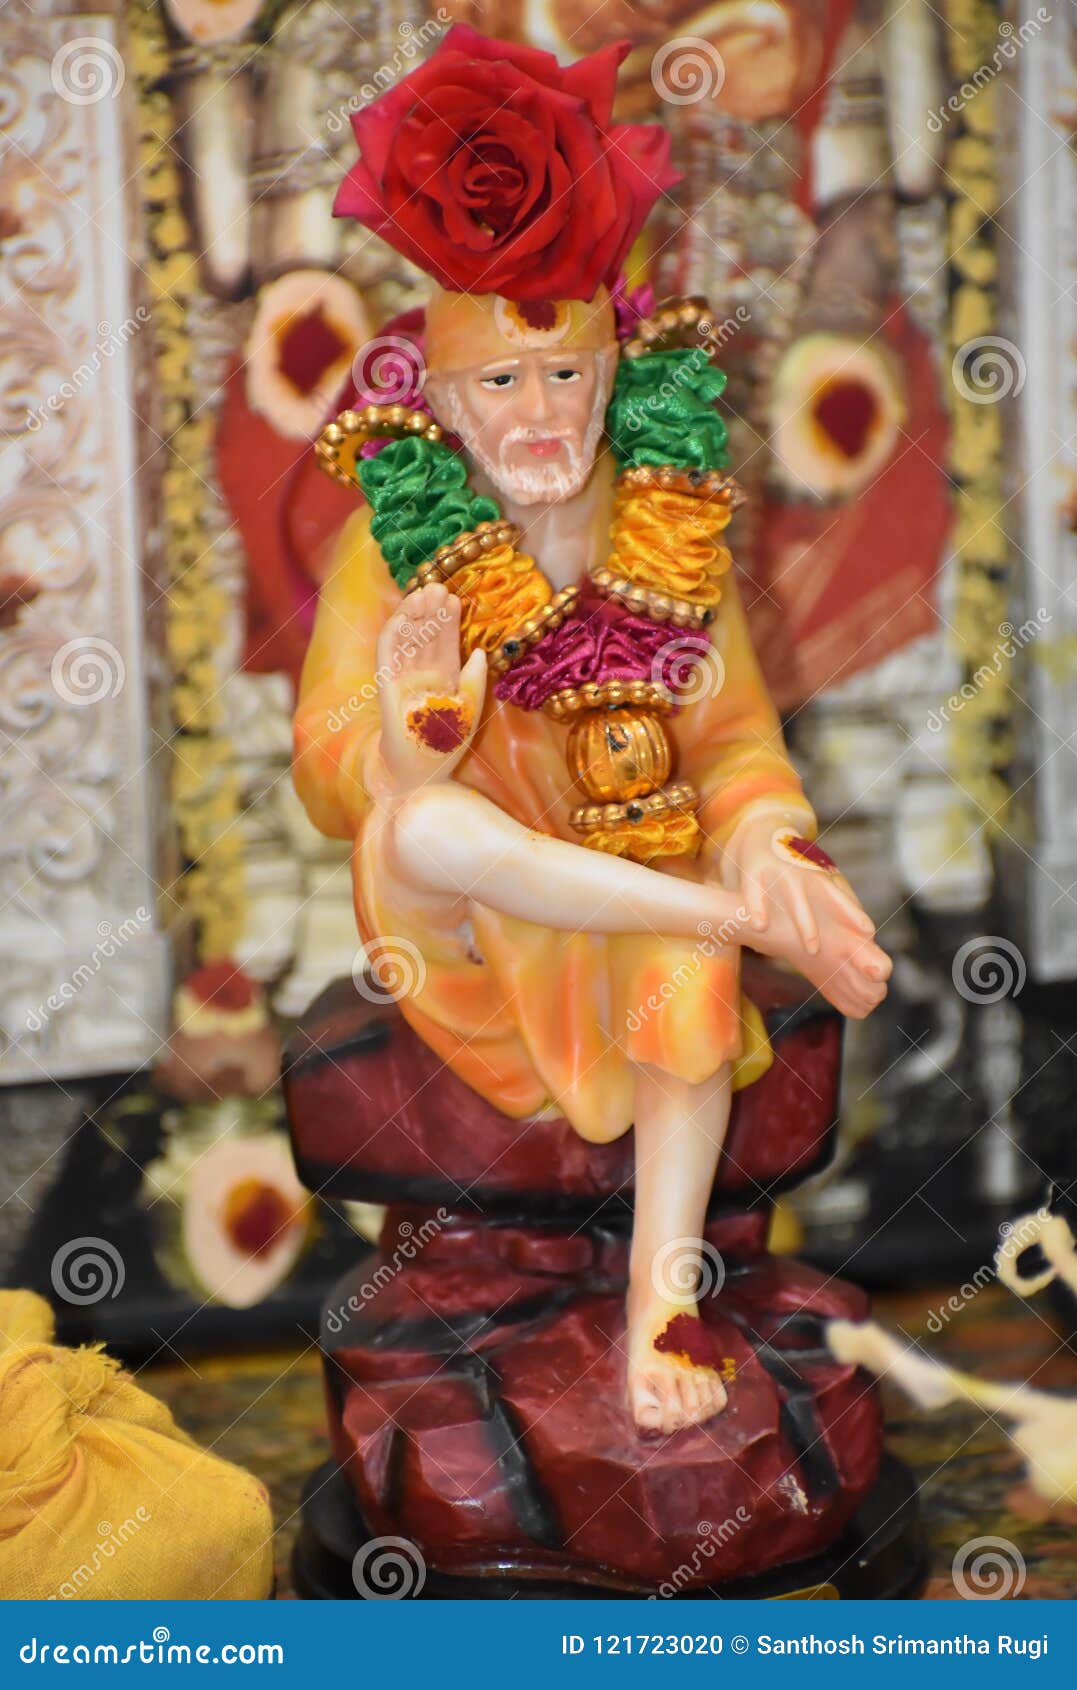 Sai Baba stock photo. Image of baba, statue, culture - 121723020